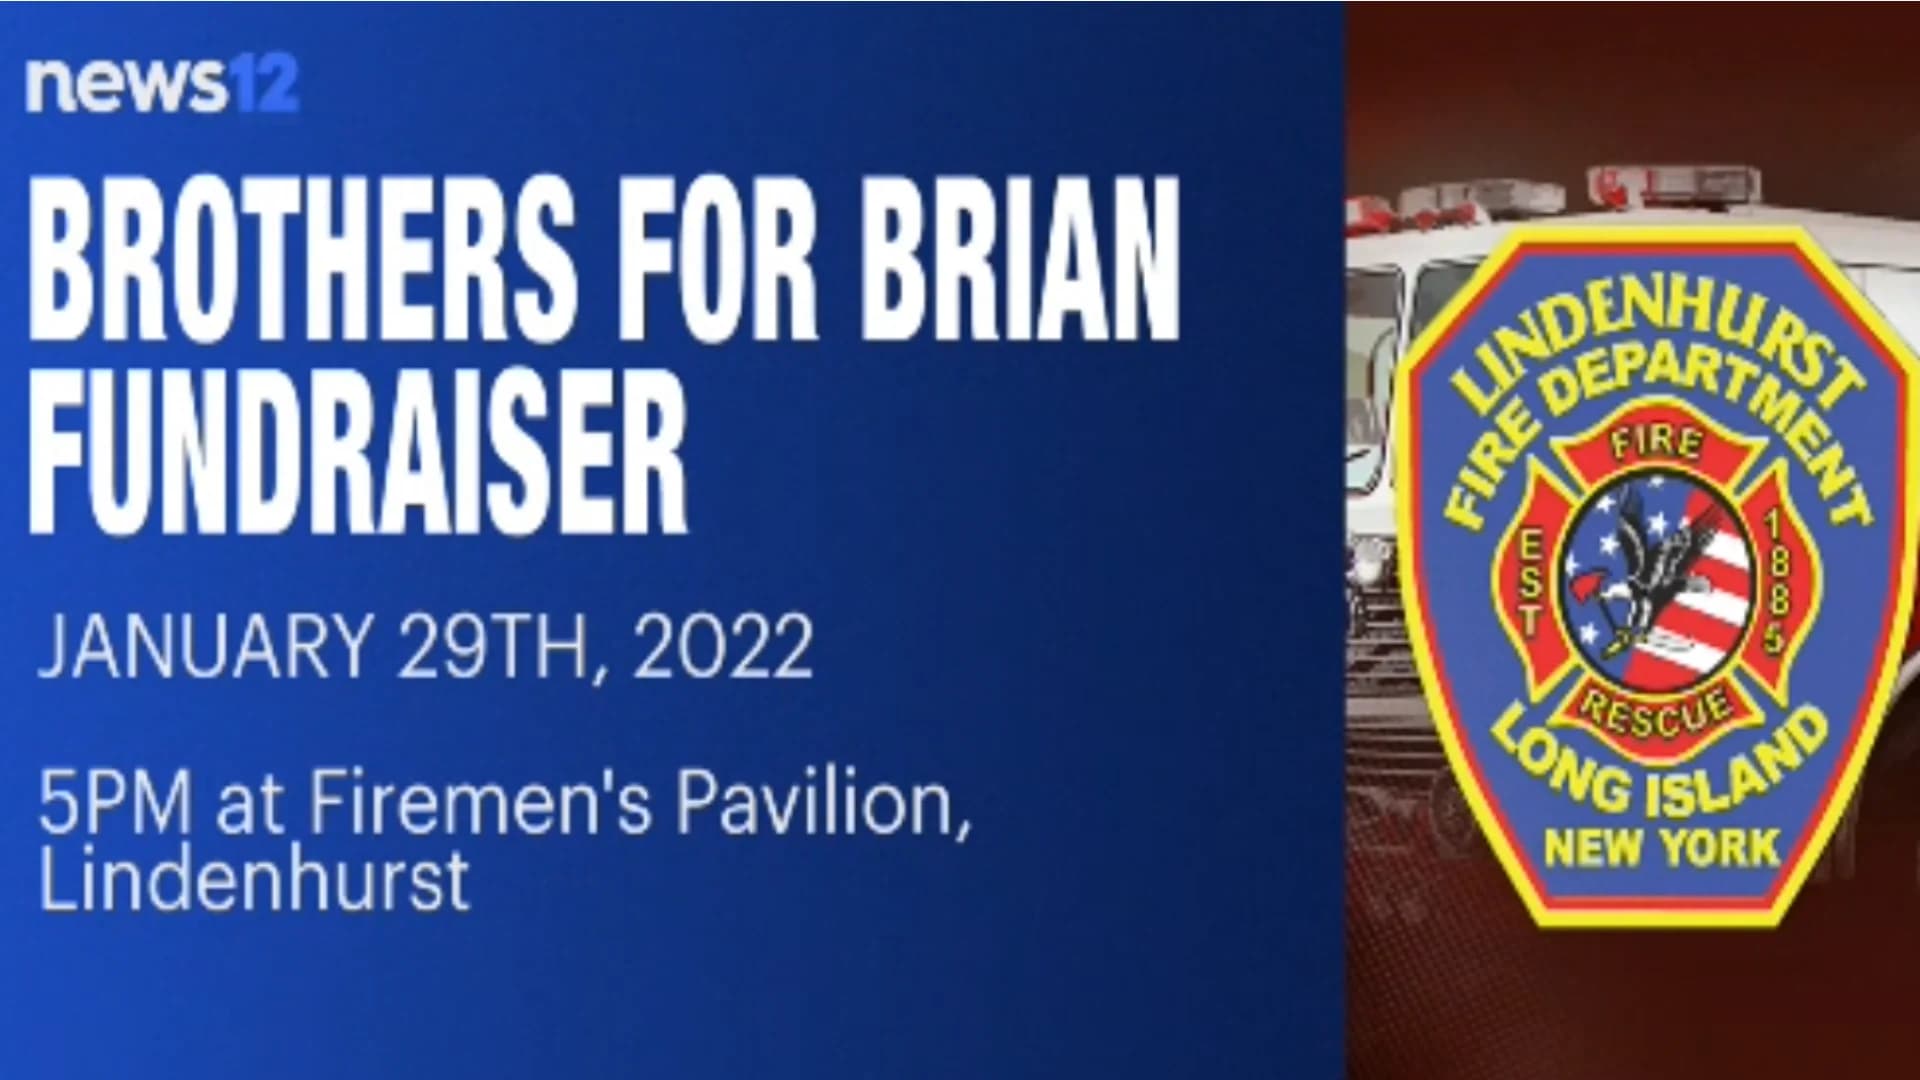 'Brothers for Brian' fundraiser looks to raise money for volunteer firefighter battling brain cancer